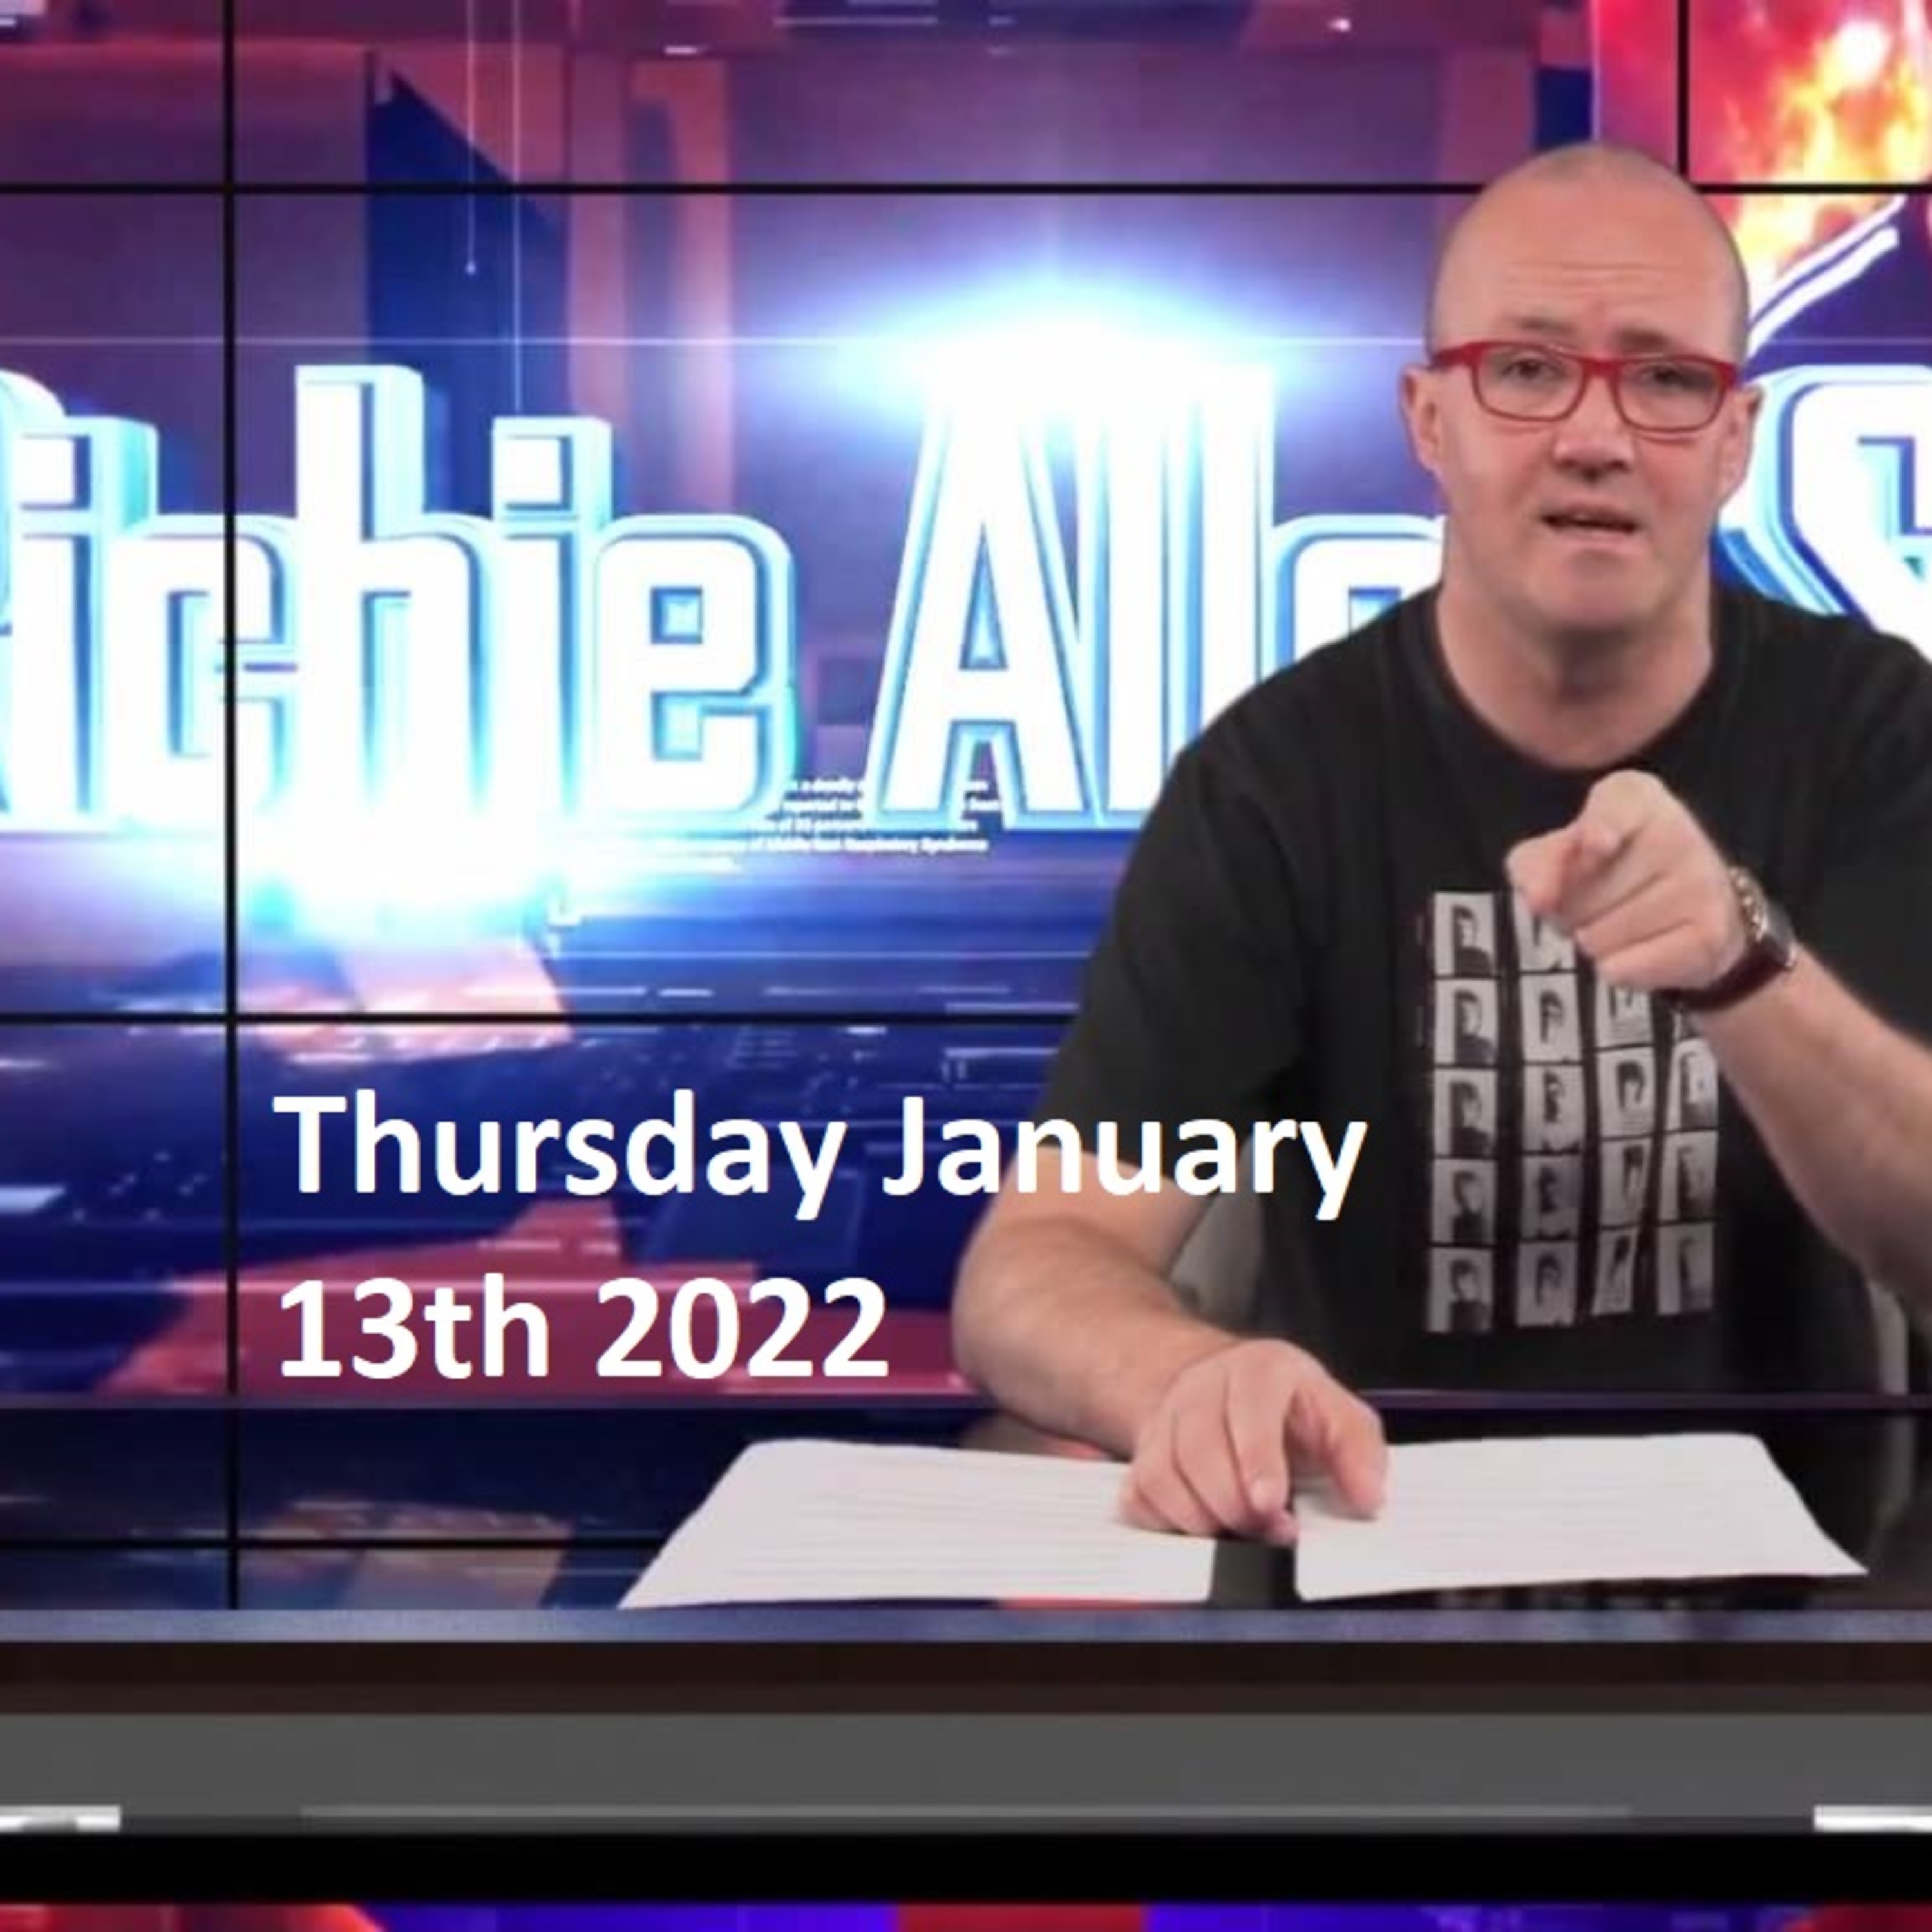 Episode 1389: The Richie Allen Show Thursday January 13th 2022